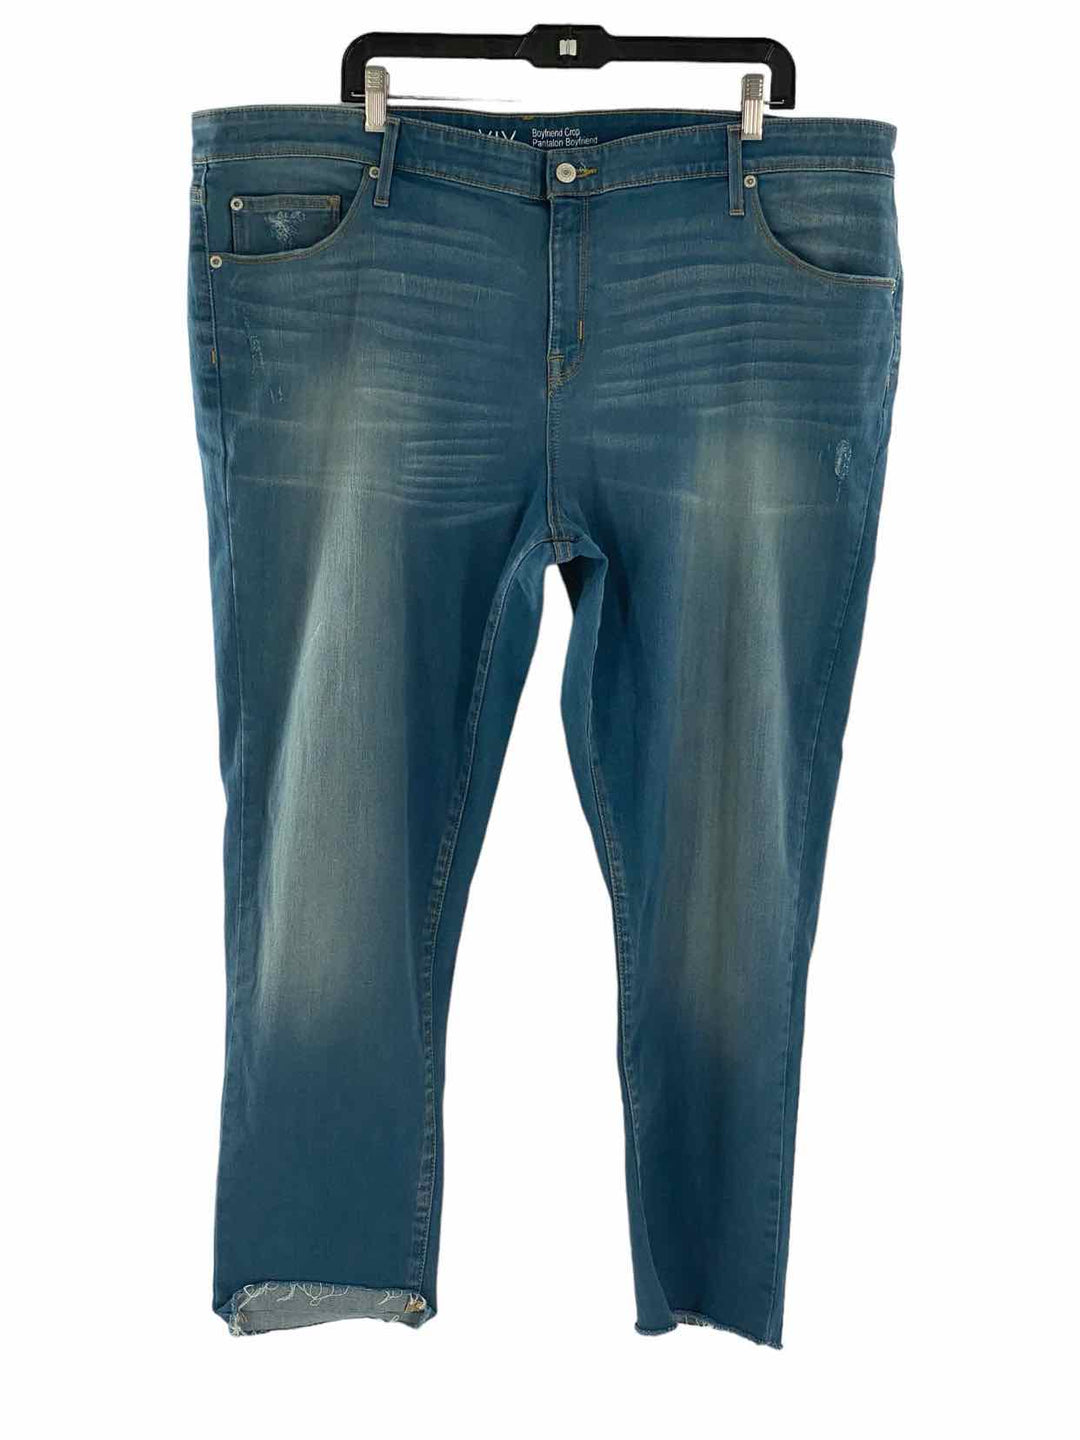 Ava & Viv Size 22W Blue Jeans